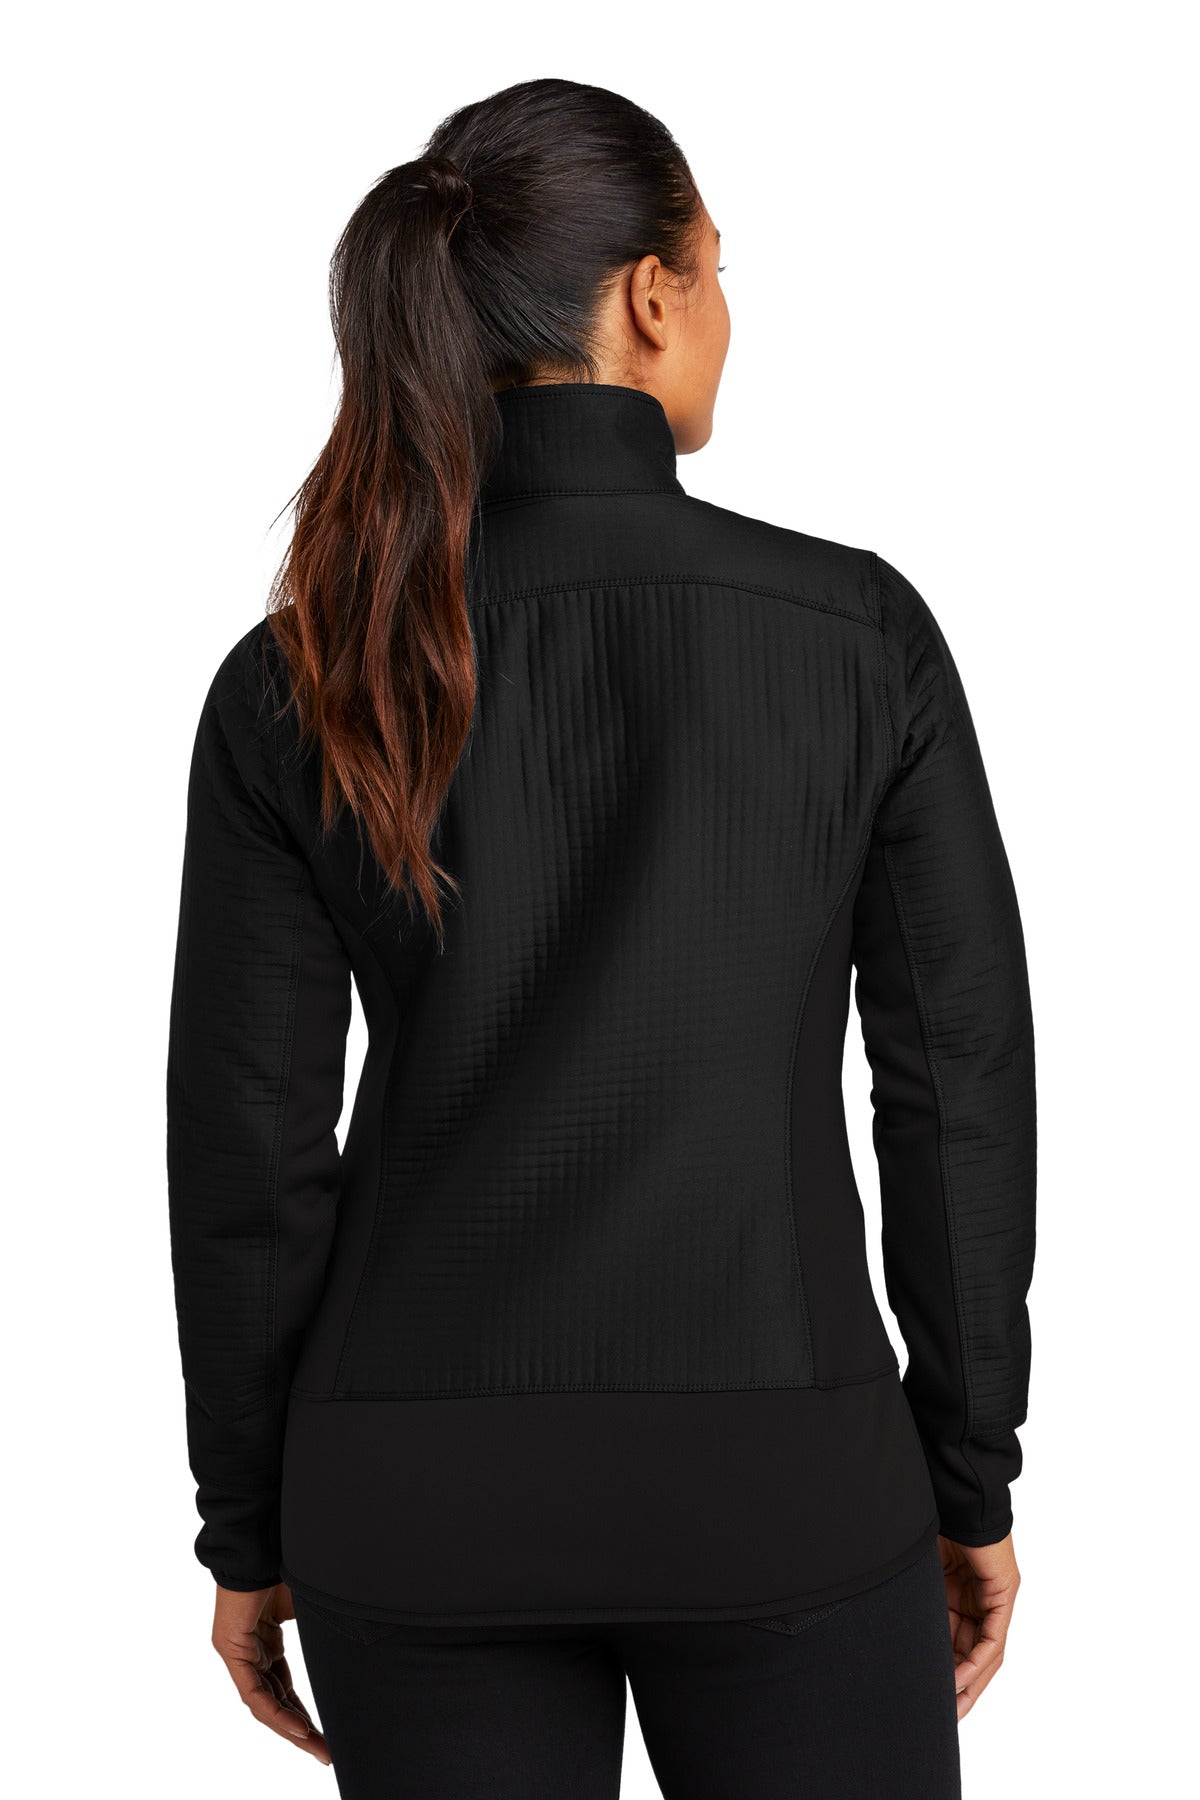 OGIO ® Ladies Trax Jacket. LOG726 - DFW Impression